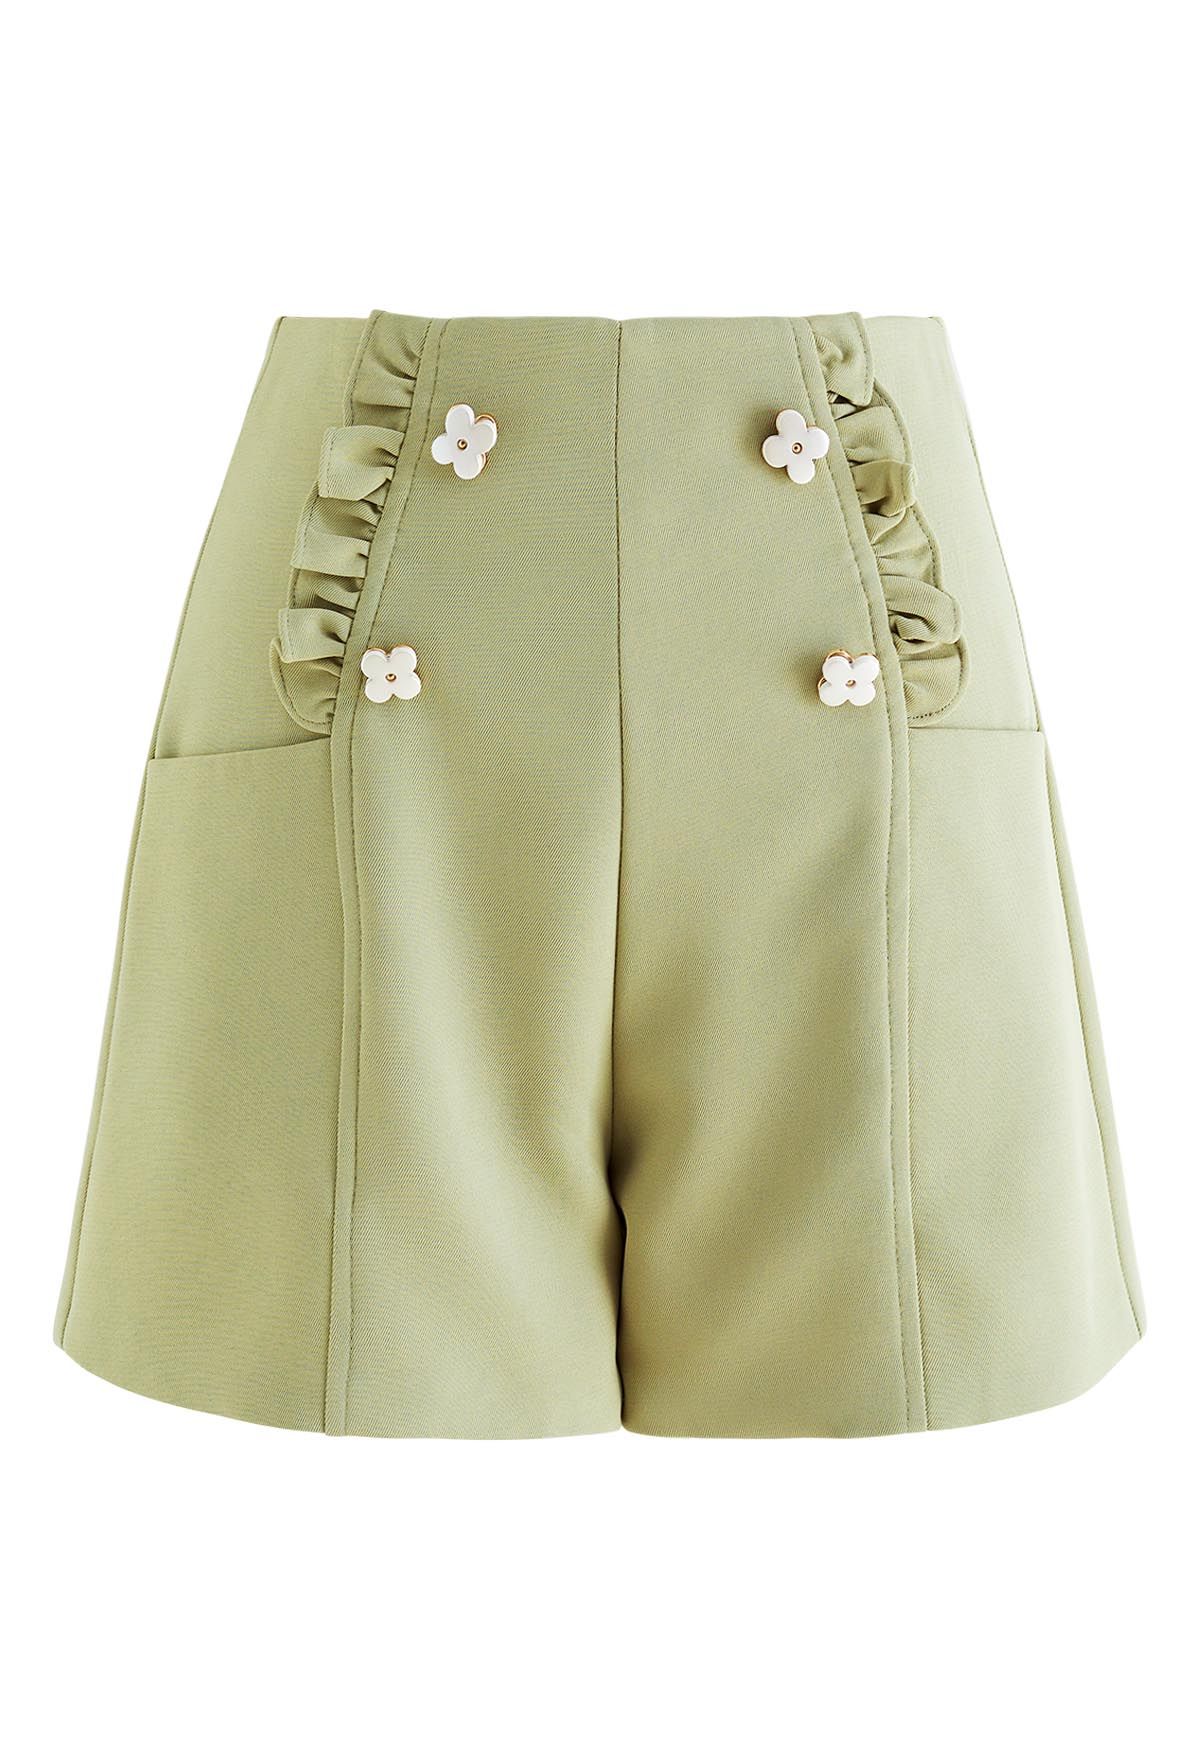 Adorables pantalones cortos con ribete de volantes de flores en verde guisante